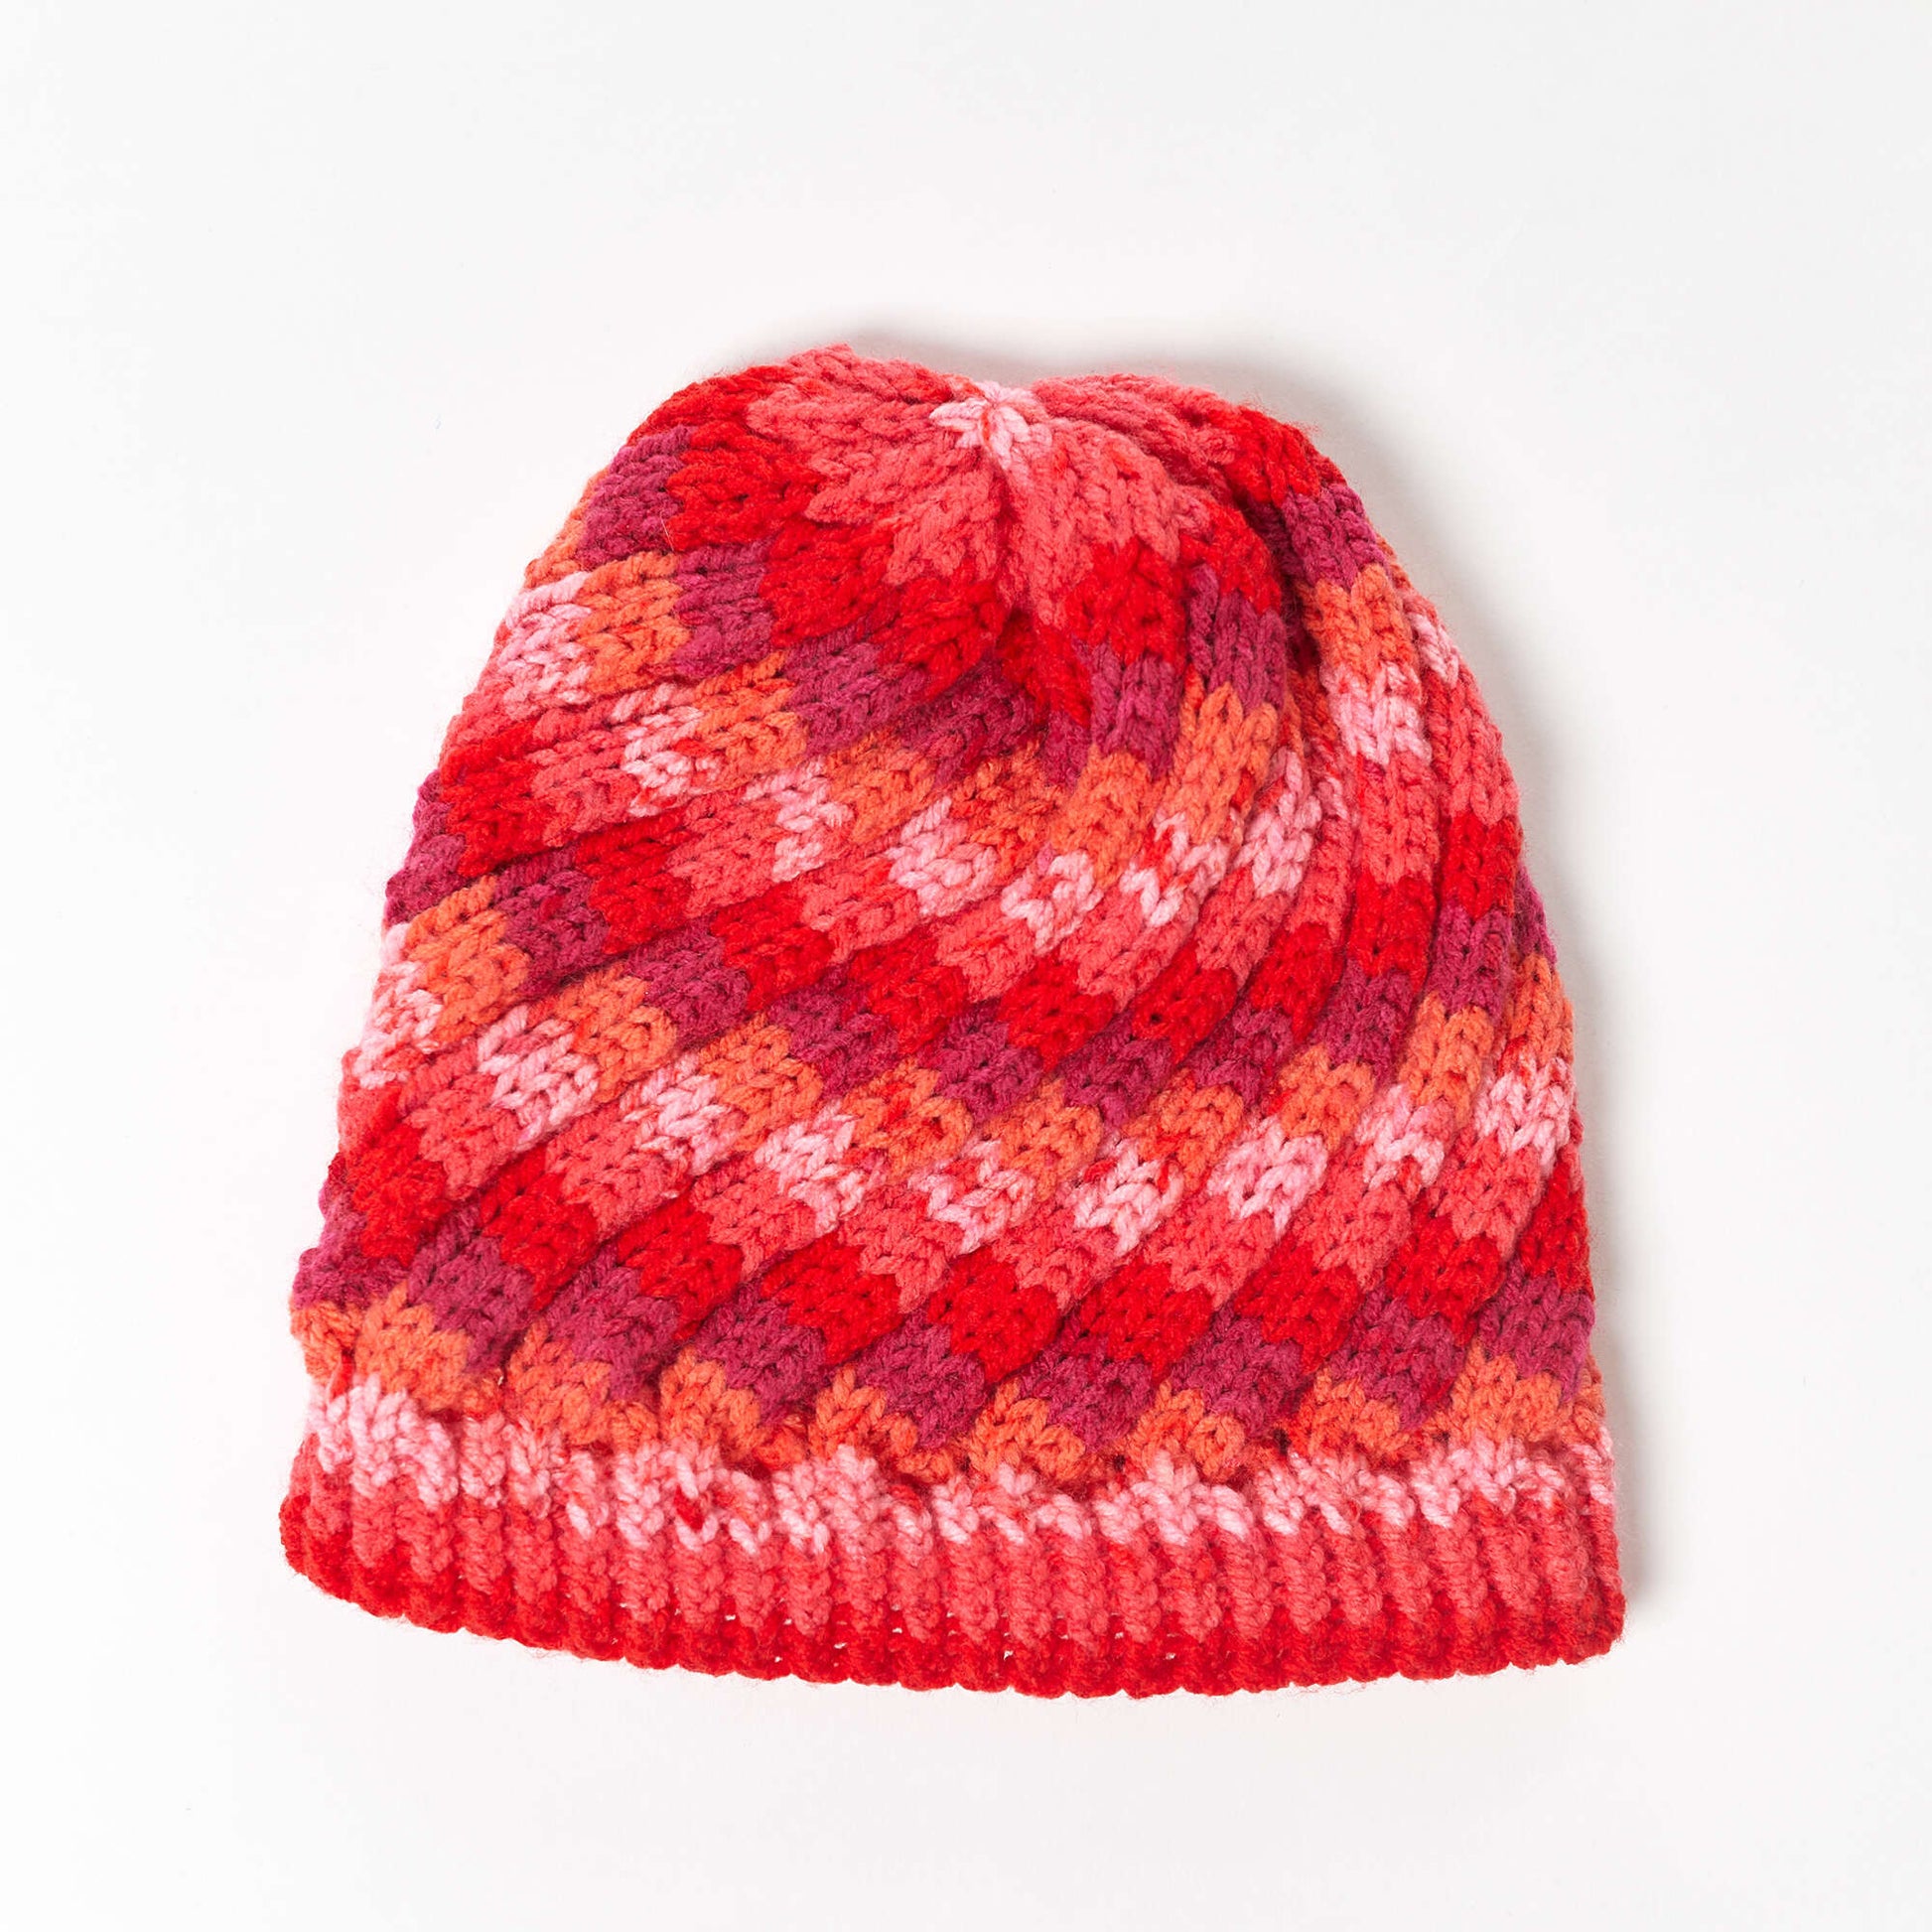 Free Red Heart Knit Twisted Stripes Hat Pattern